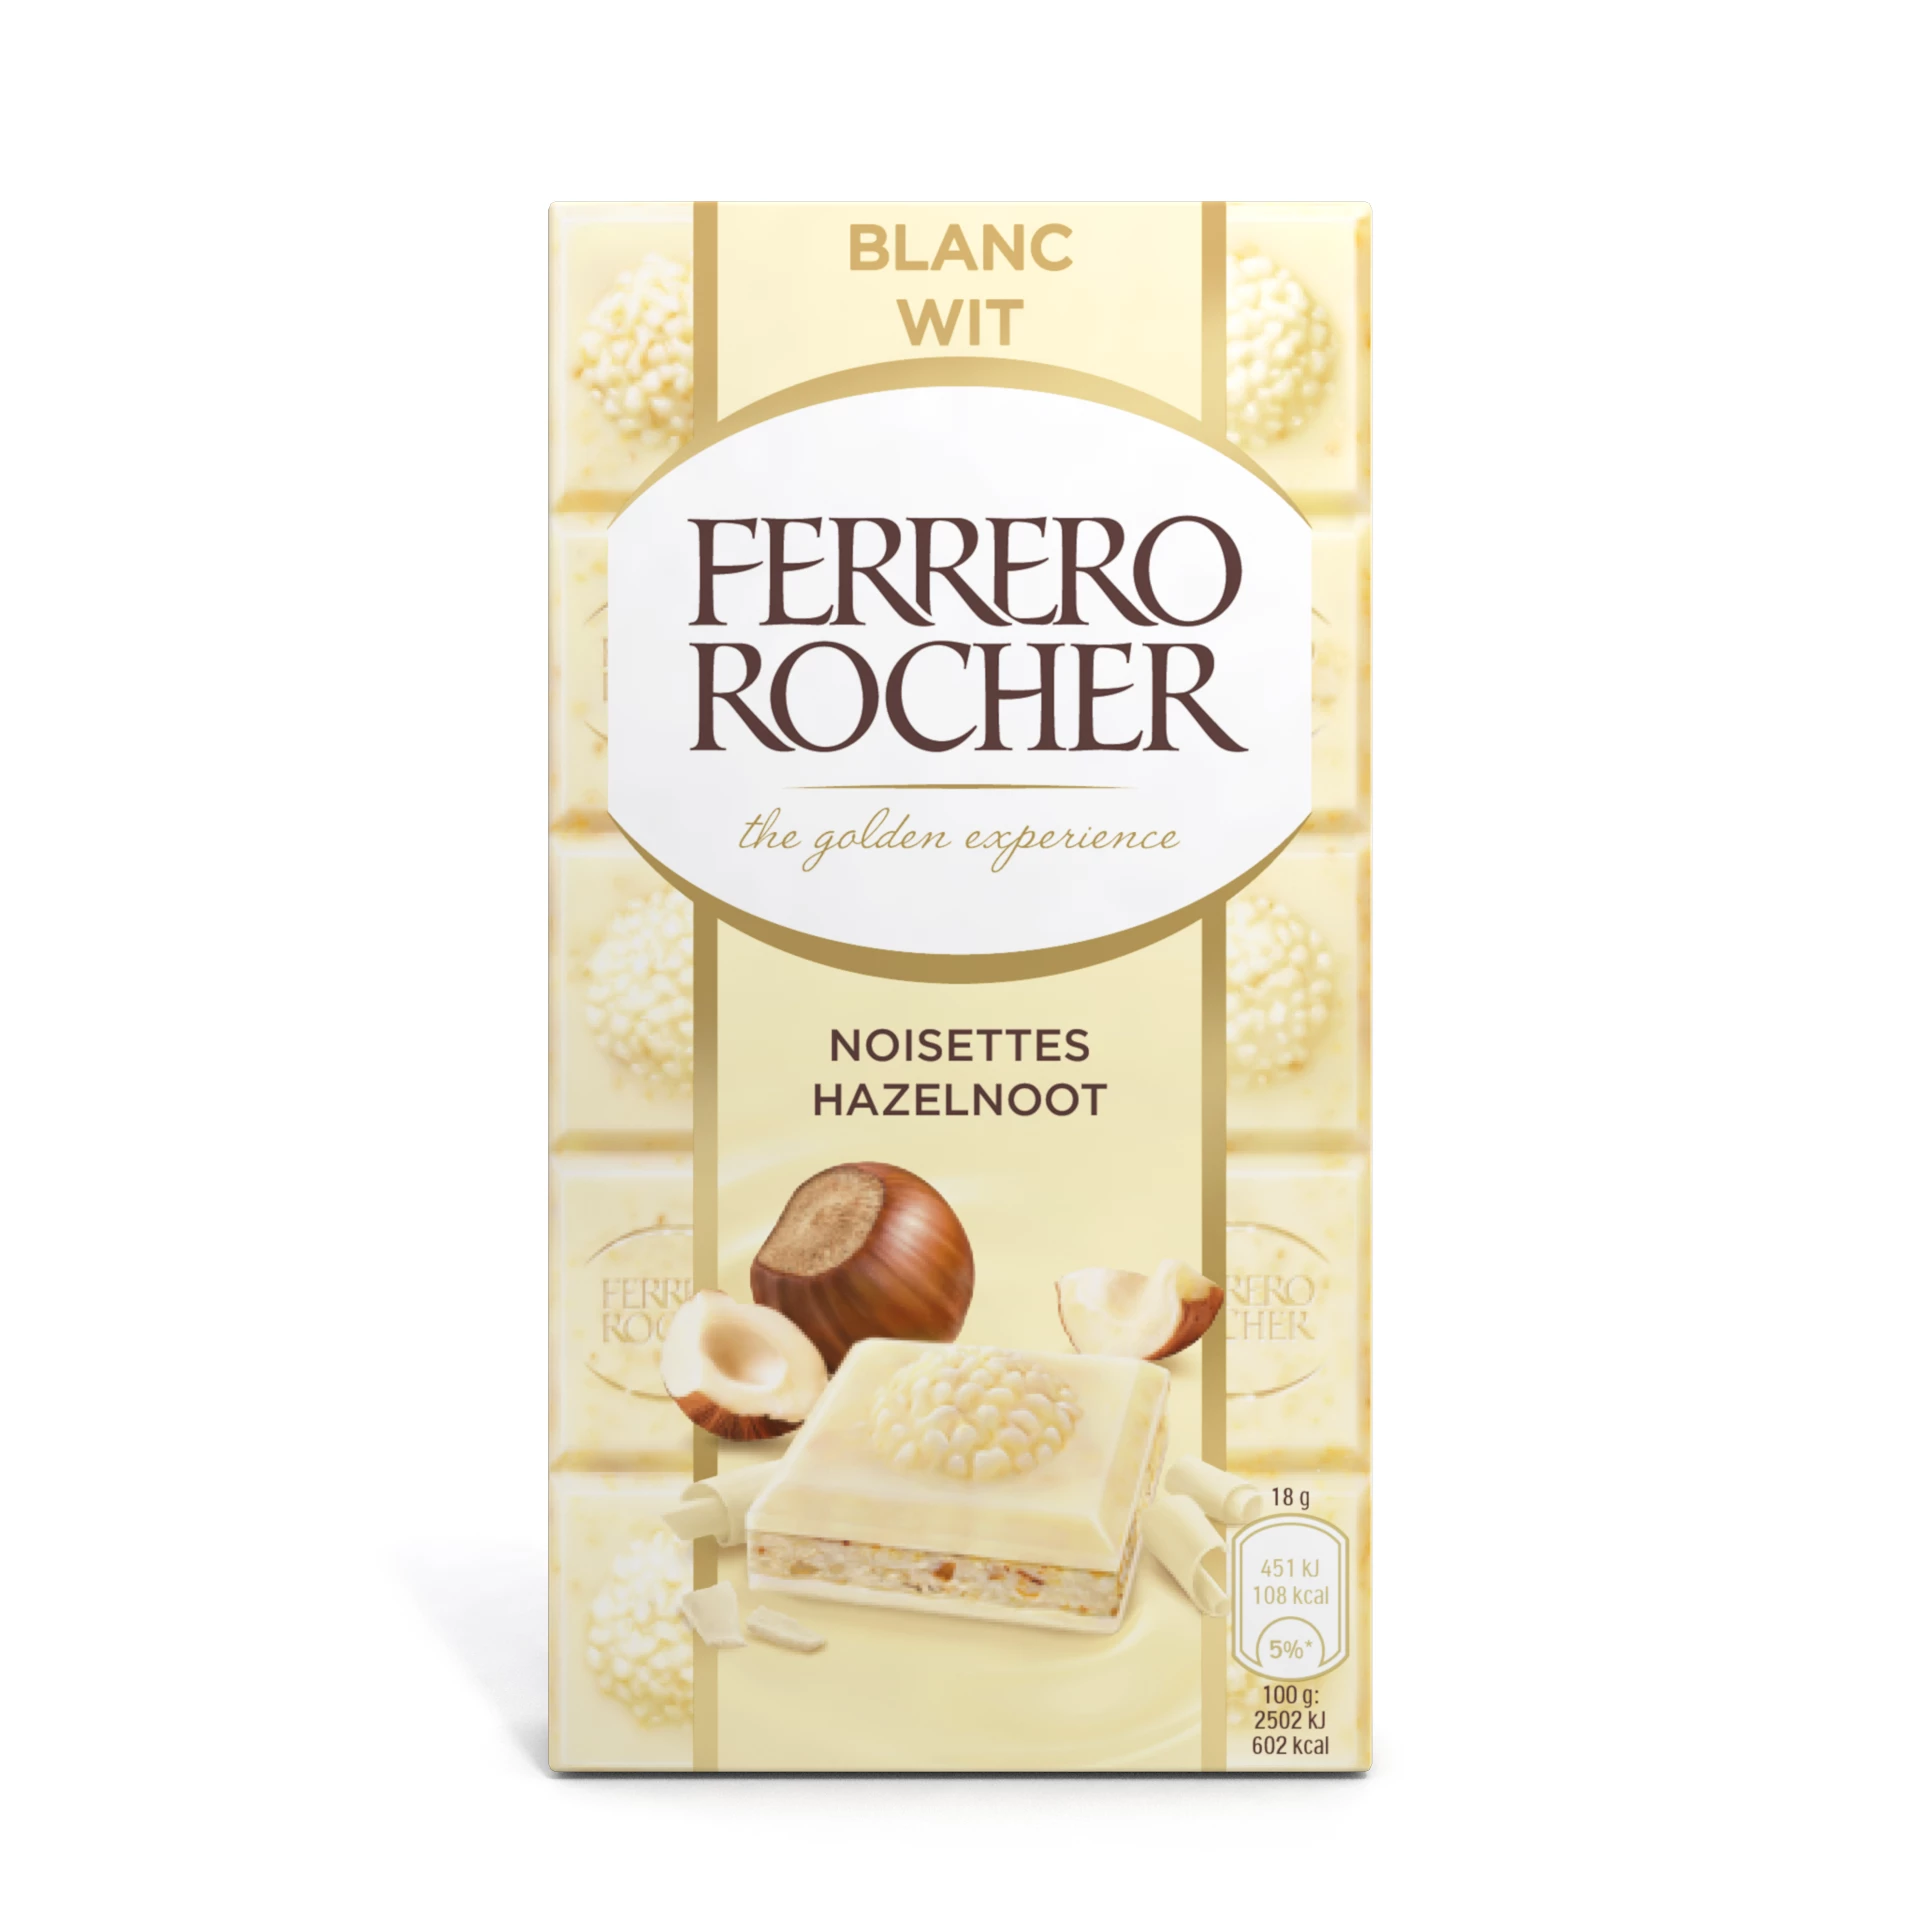 Ferrero Rocher Witte Hazelnoot, 90g - FERRERO